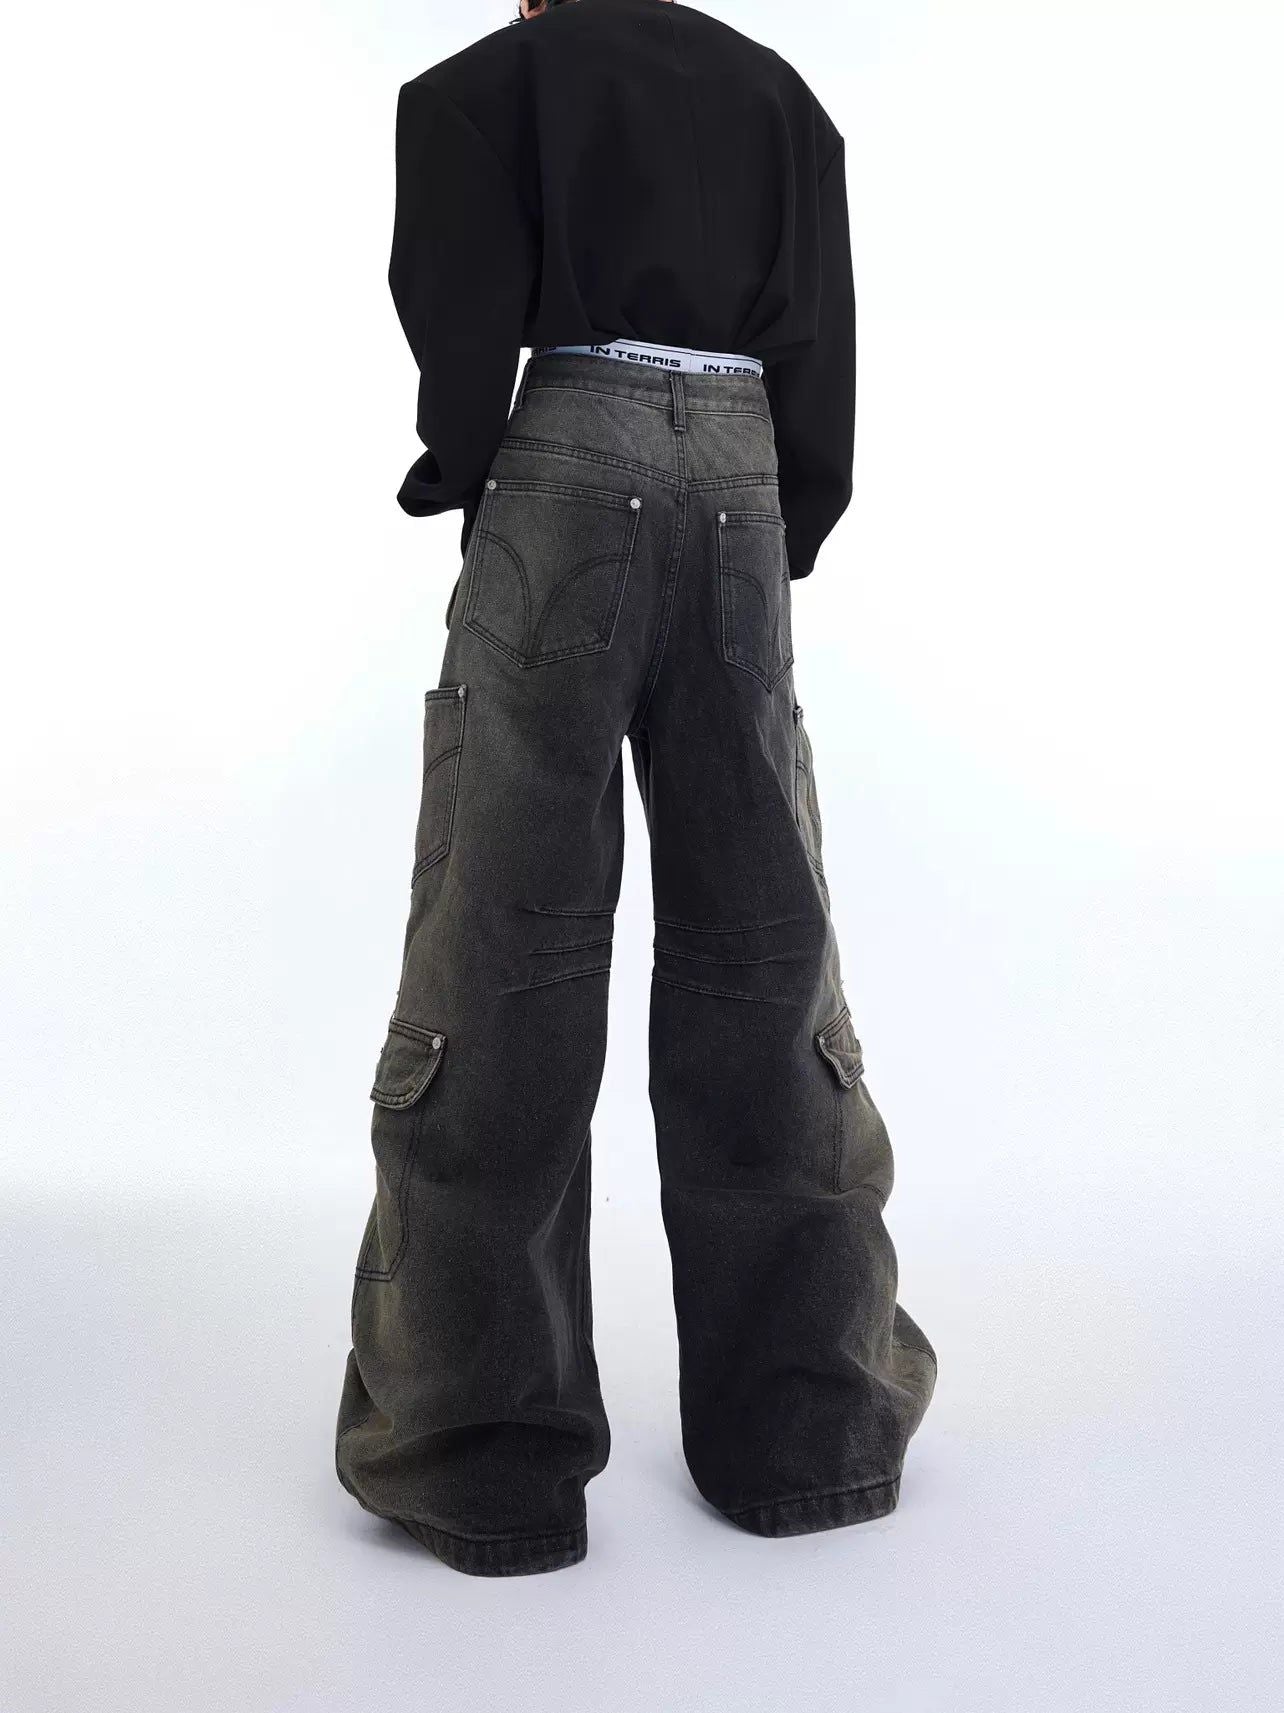 Washed Pocket & Zipper Structured Jeans Korean Street Fashion Jeans By Argue Culture Shop Online at OH Vault